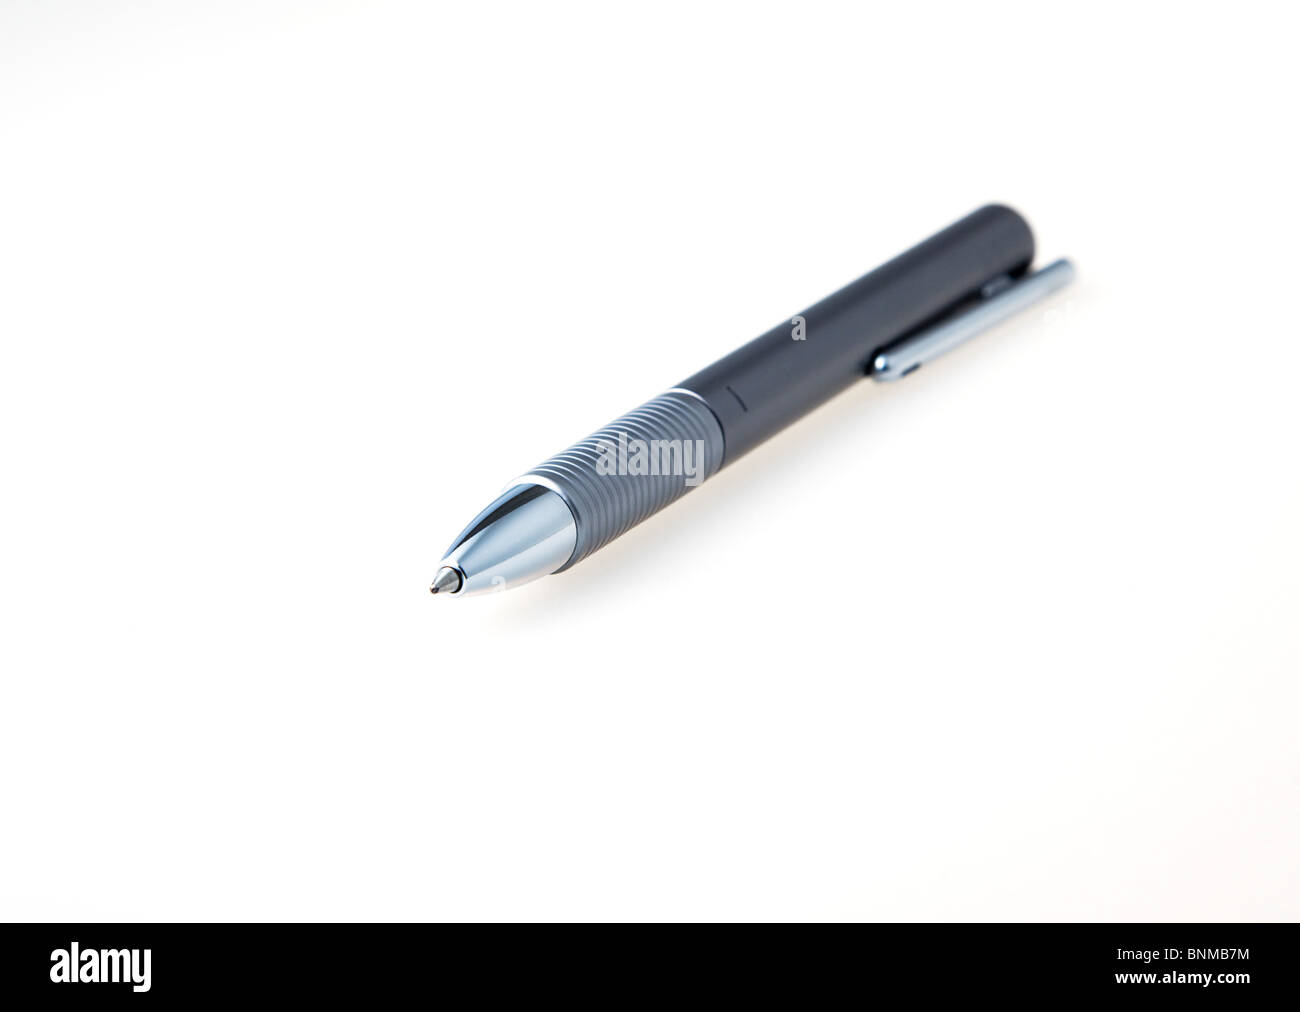 Writing, Pens, Ballpen, Lammy Ball Point Pen. Stock Photo